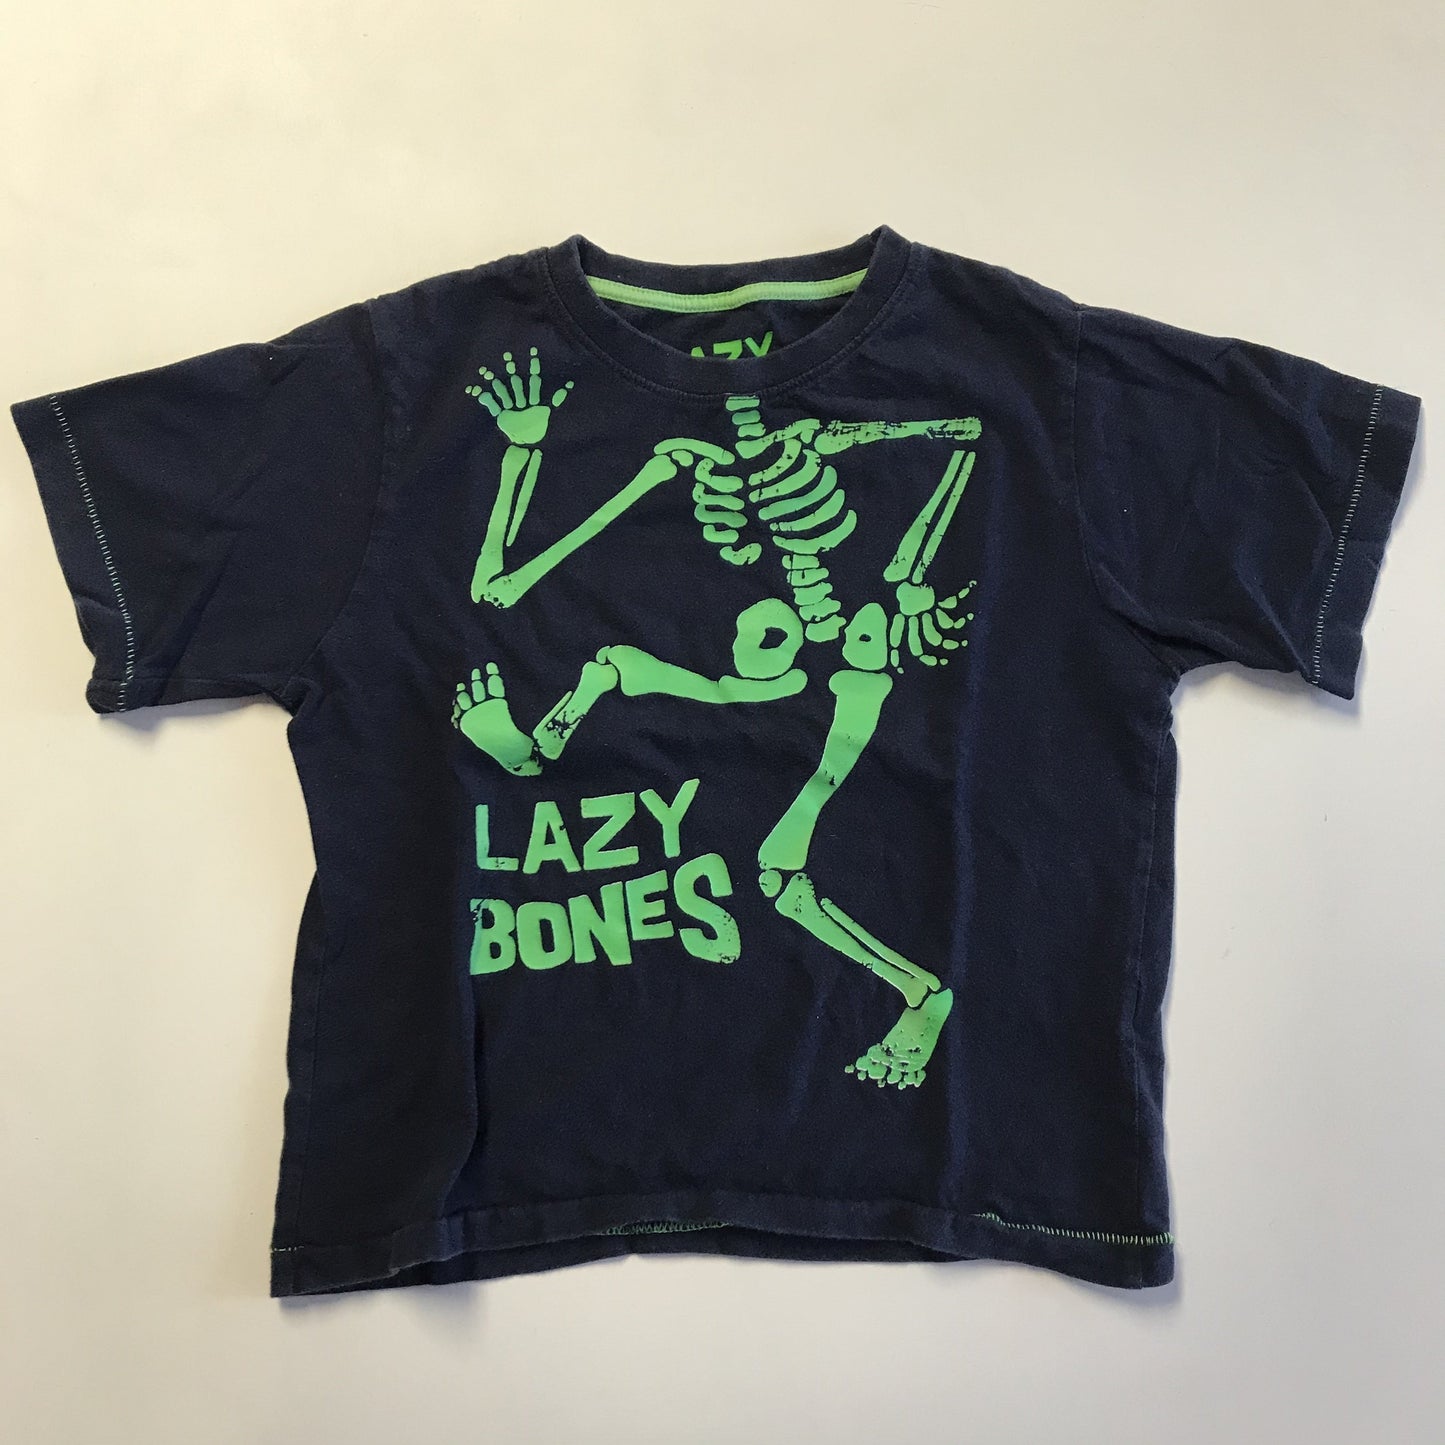 T-shirt - 'Lazy Bones' - Age 5